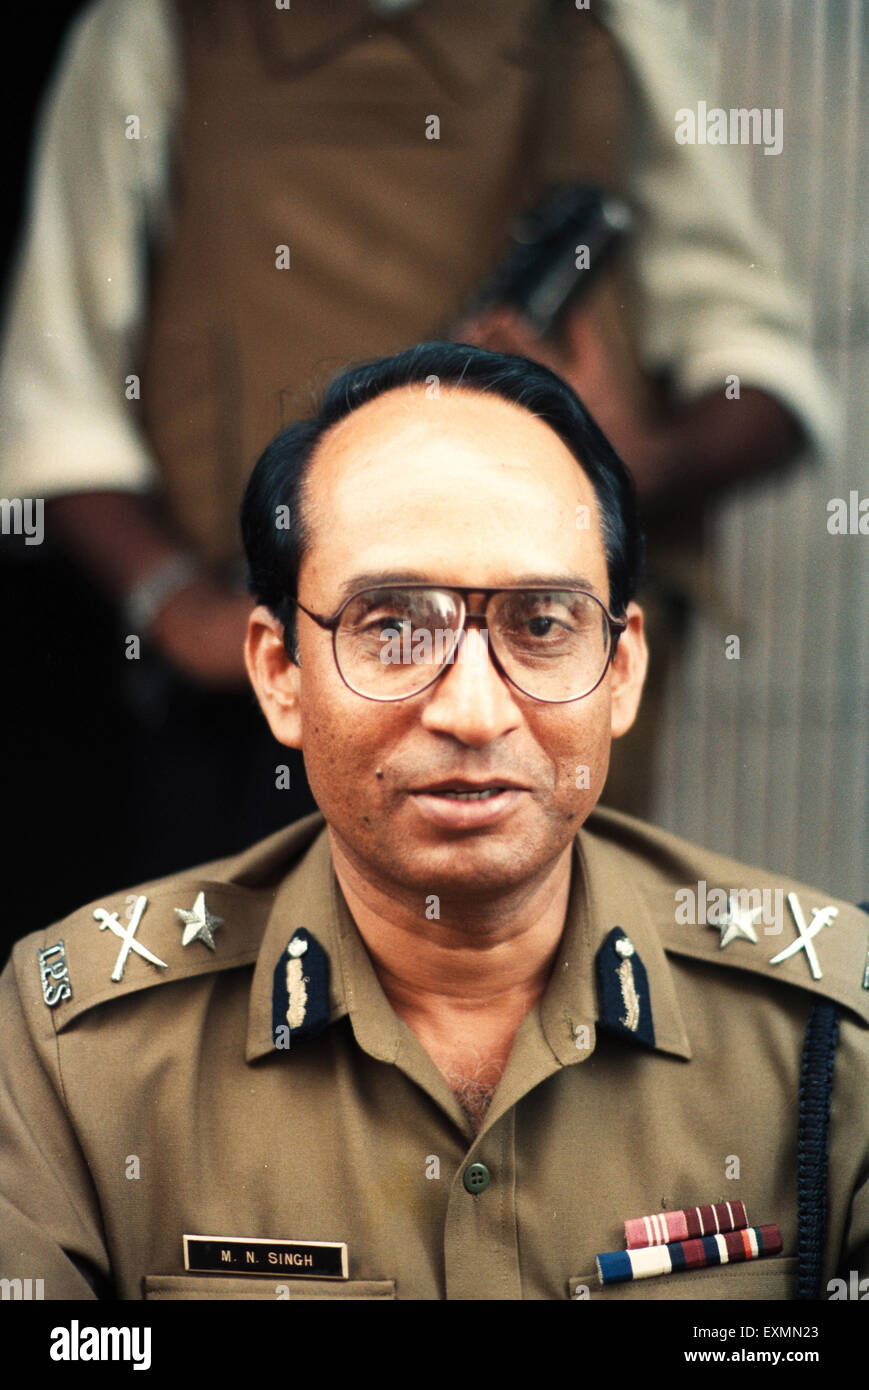 M N Singh Police Commissioner mumbai india Stock Photo